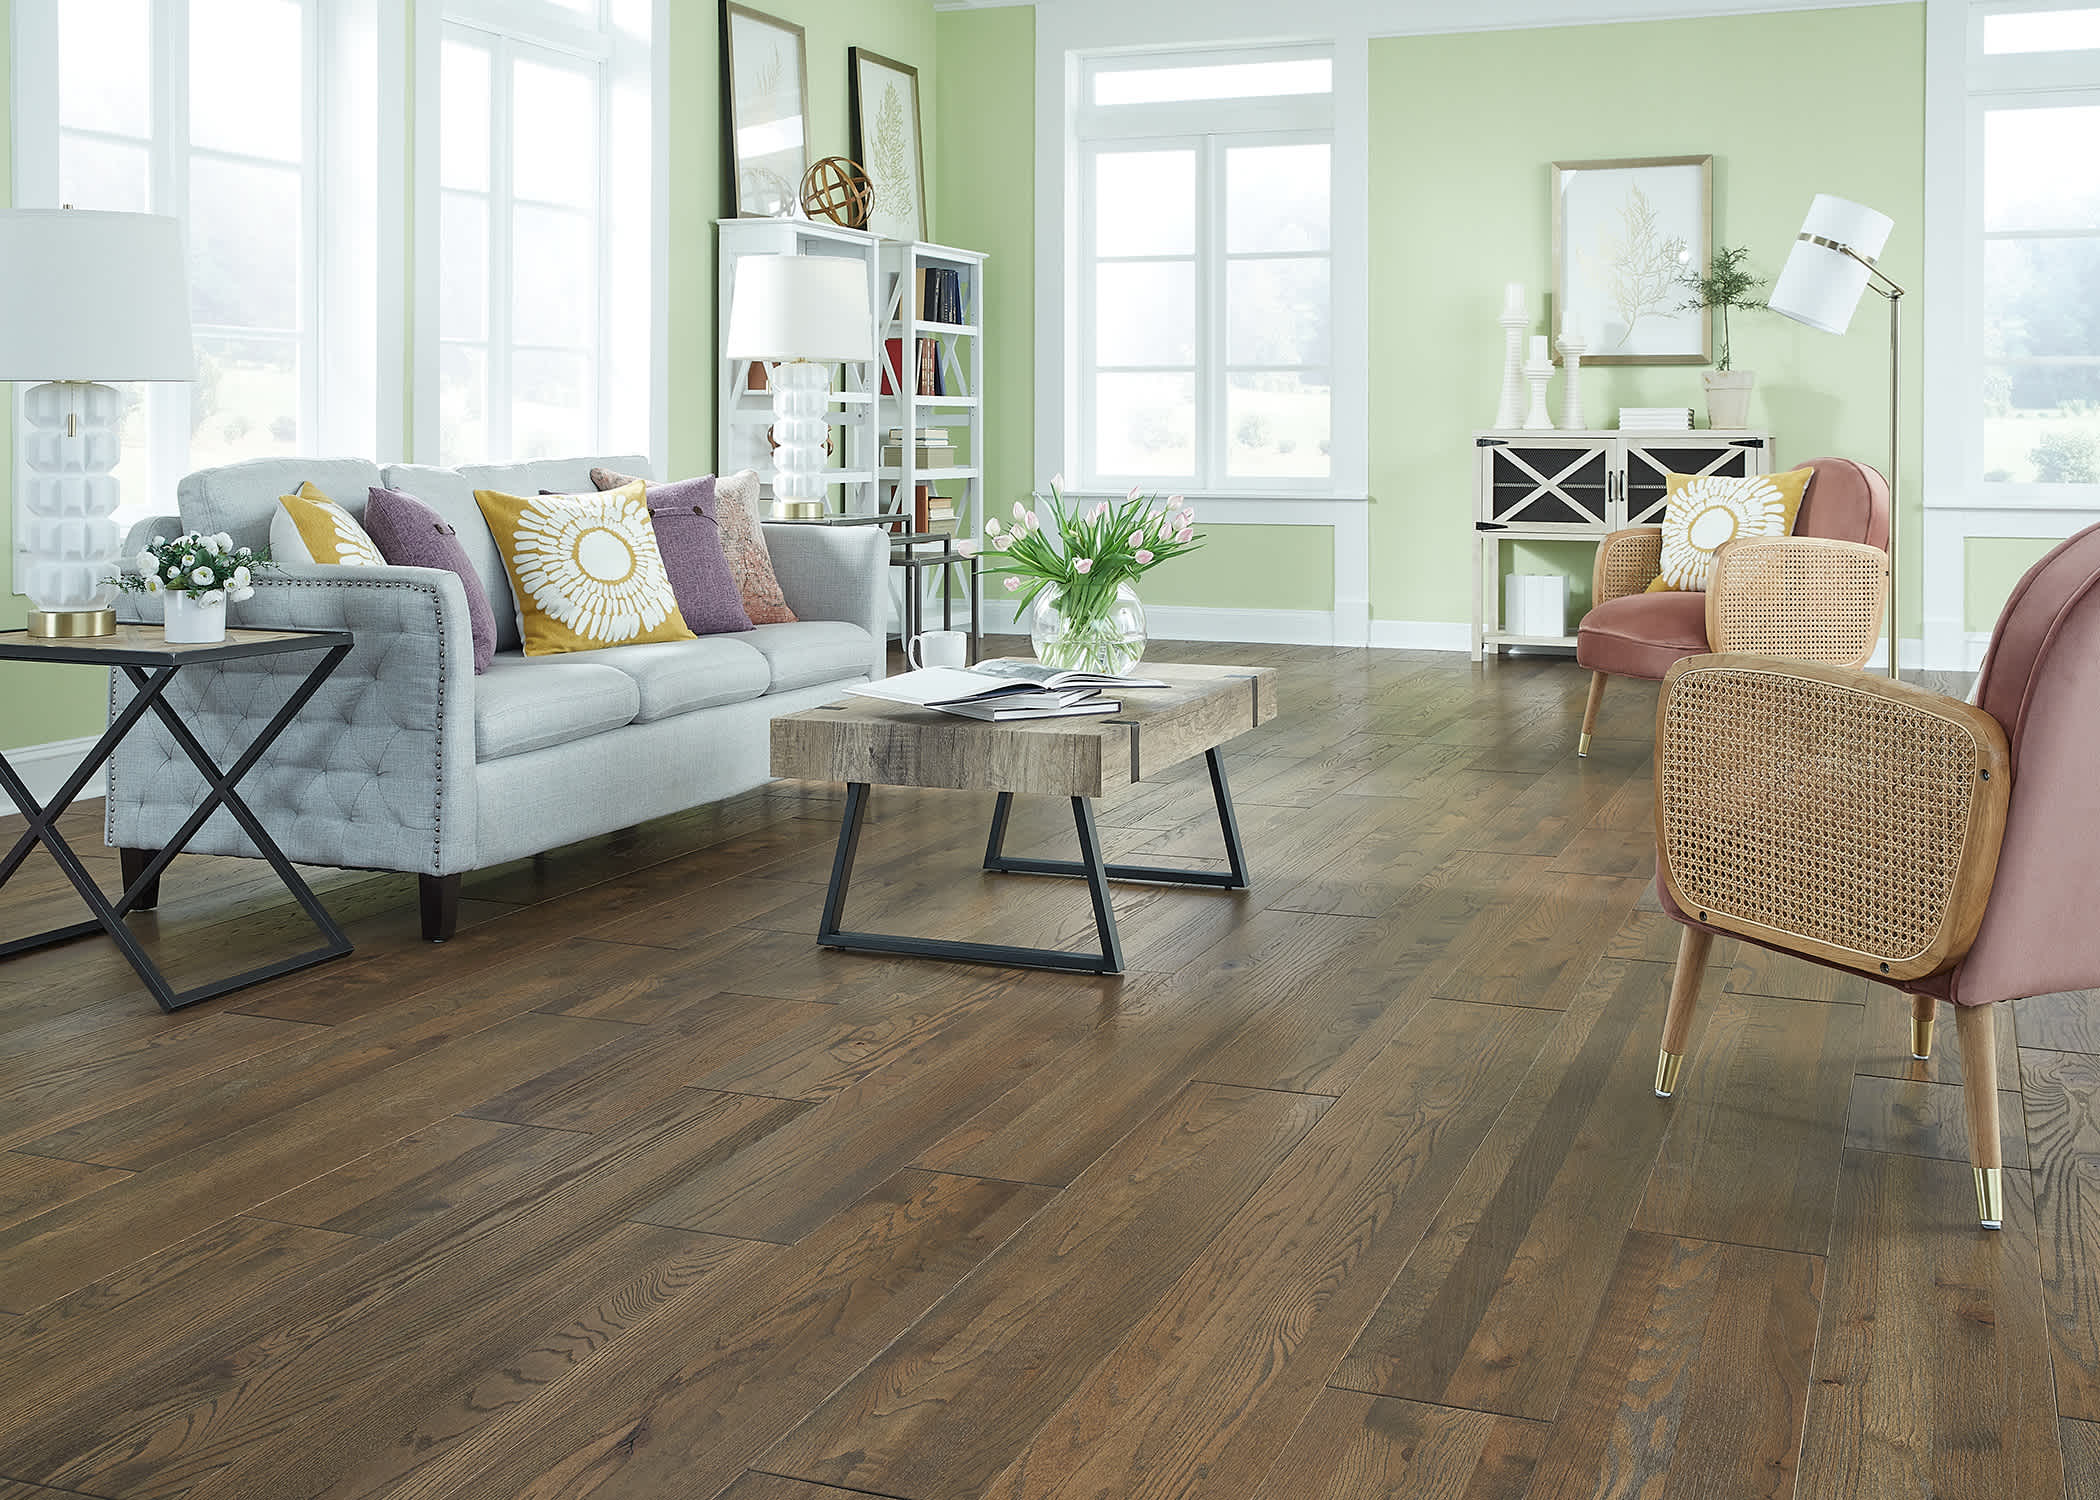 dark brown solid hardwood floor in living room with light green walls and gray sofa